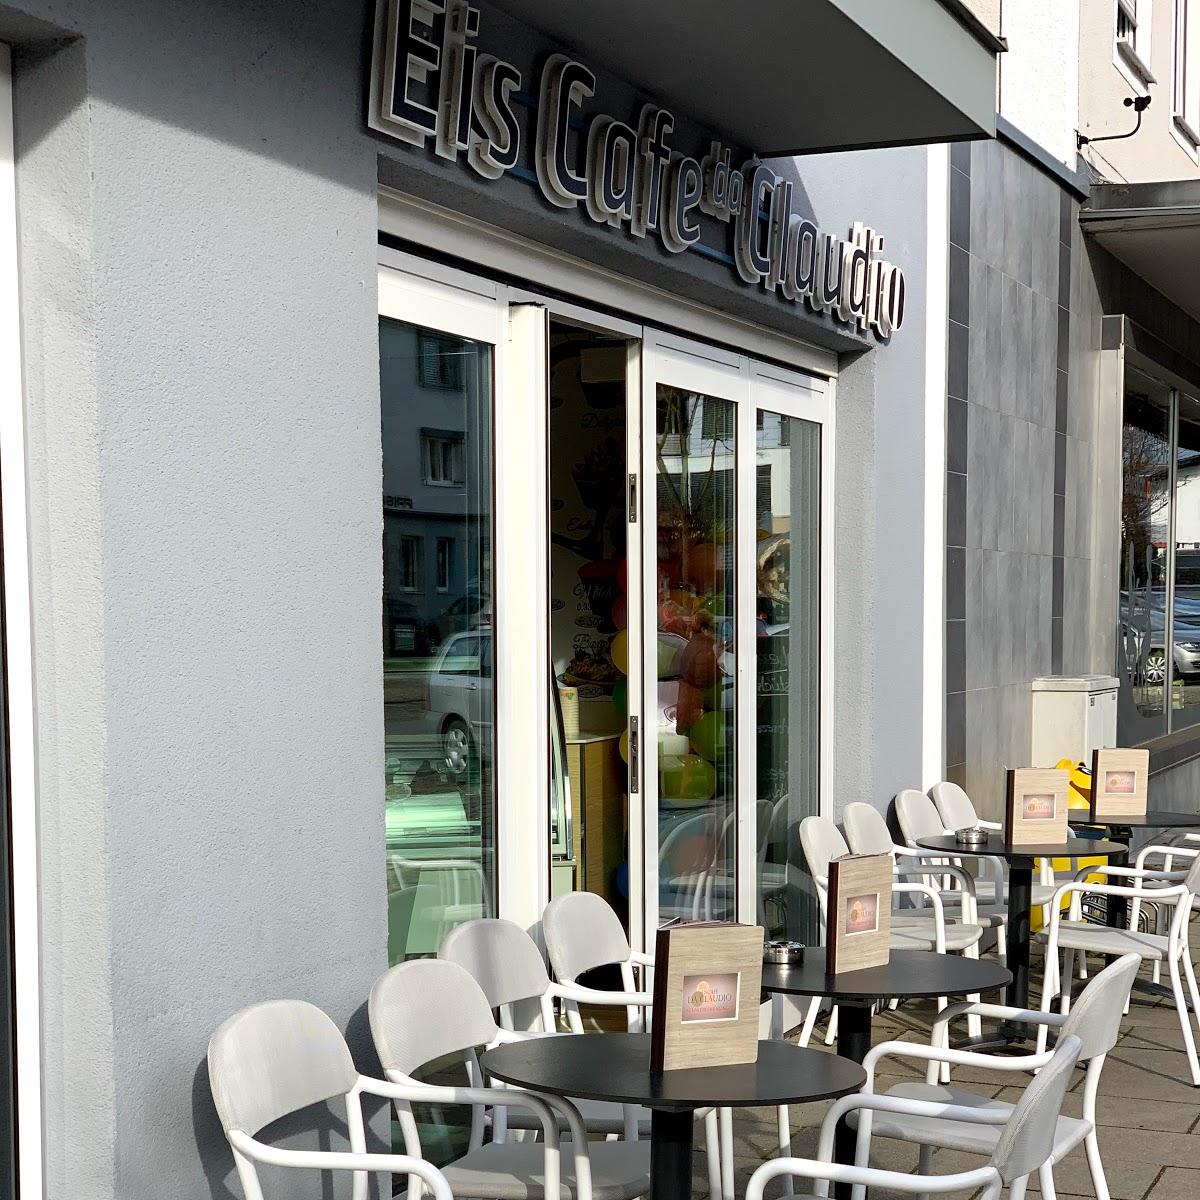 Restaurant "Eis Café da Claudio" in Wallersdorf